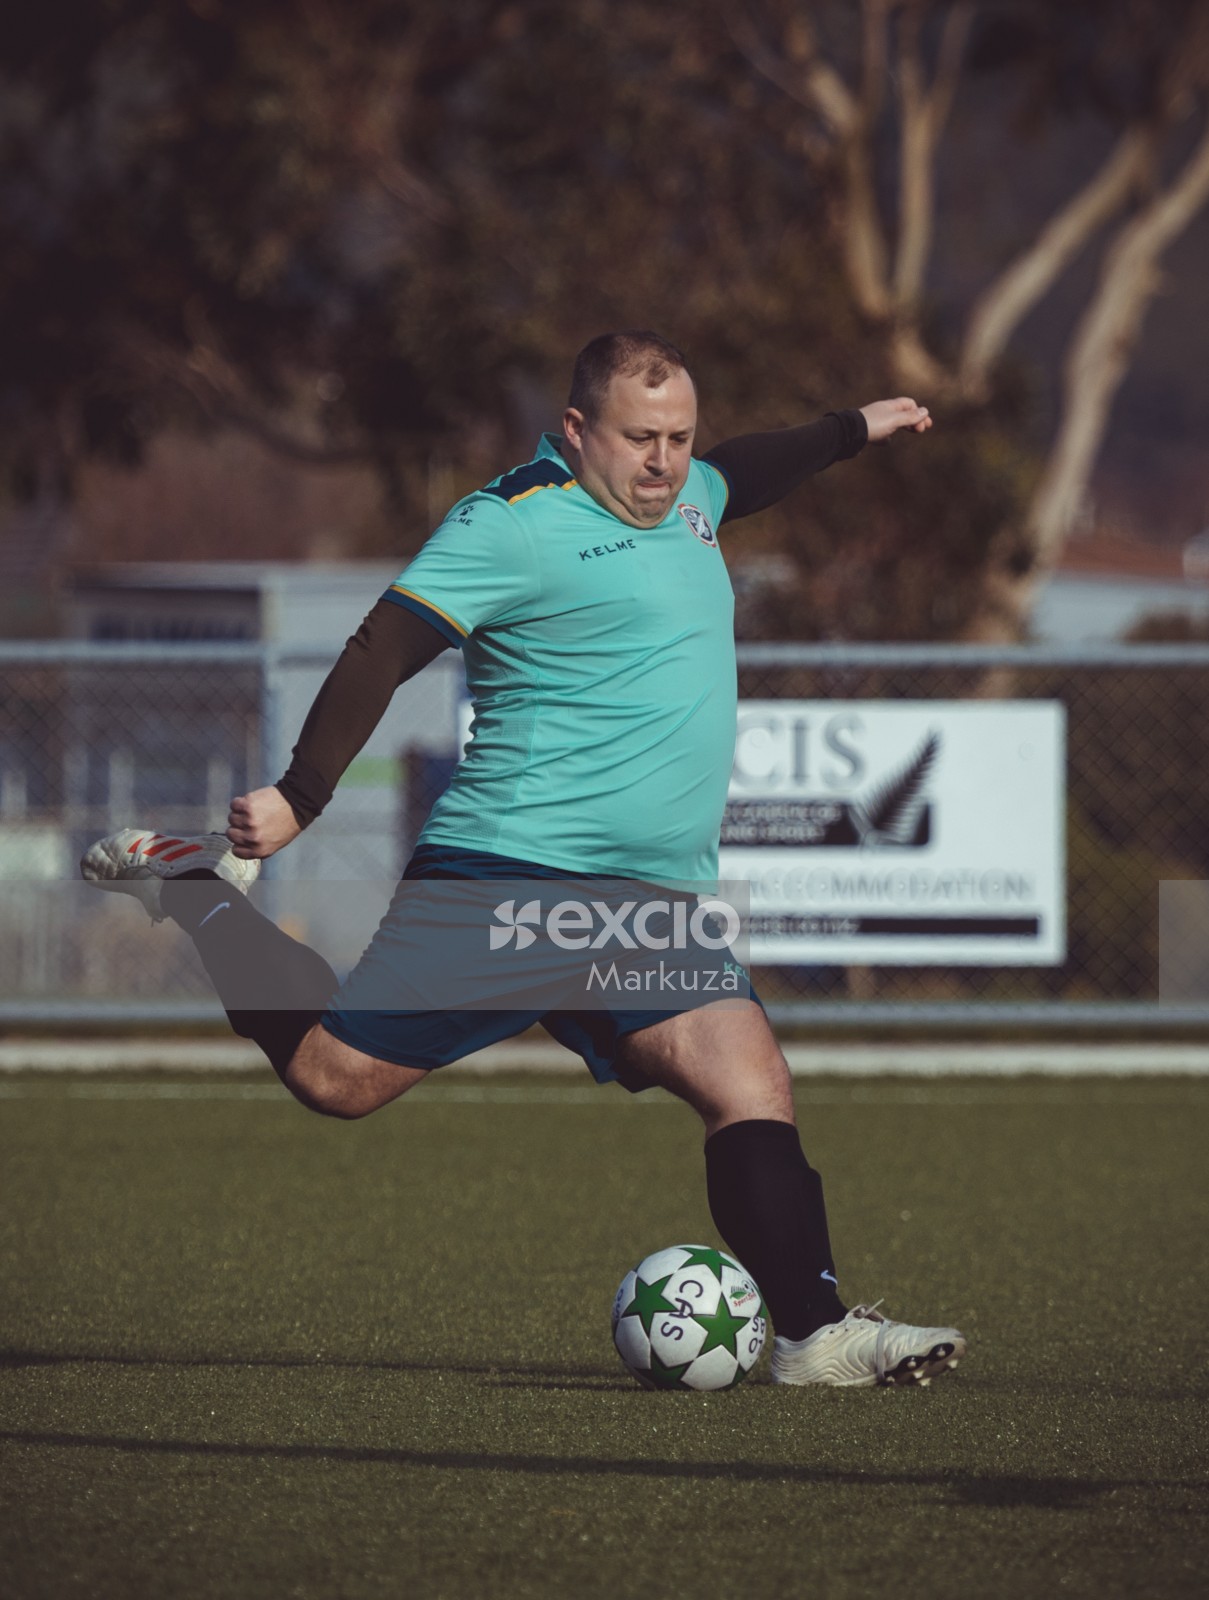 Chubby football player in turquoise Kelme shirt kicking ball